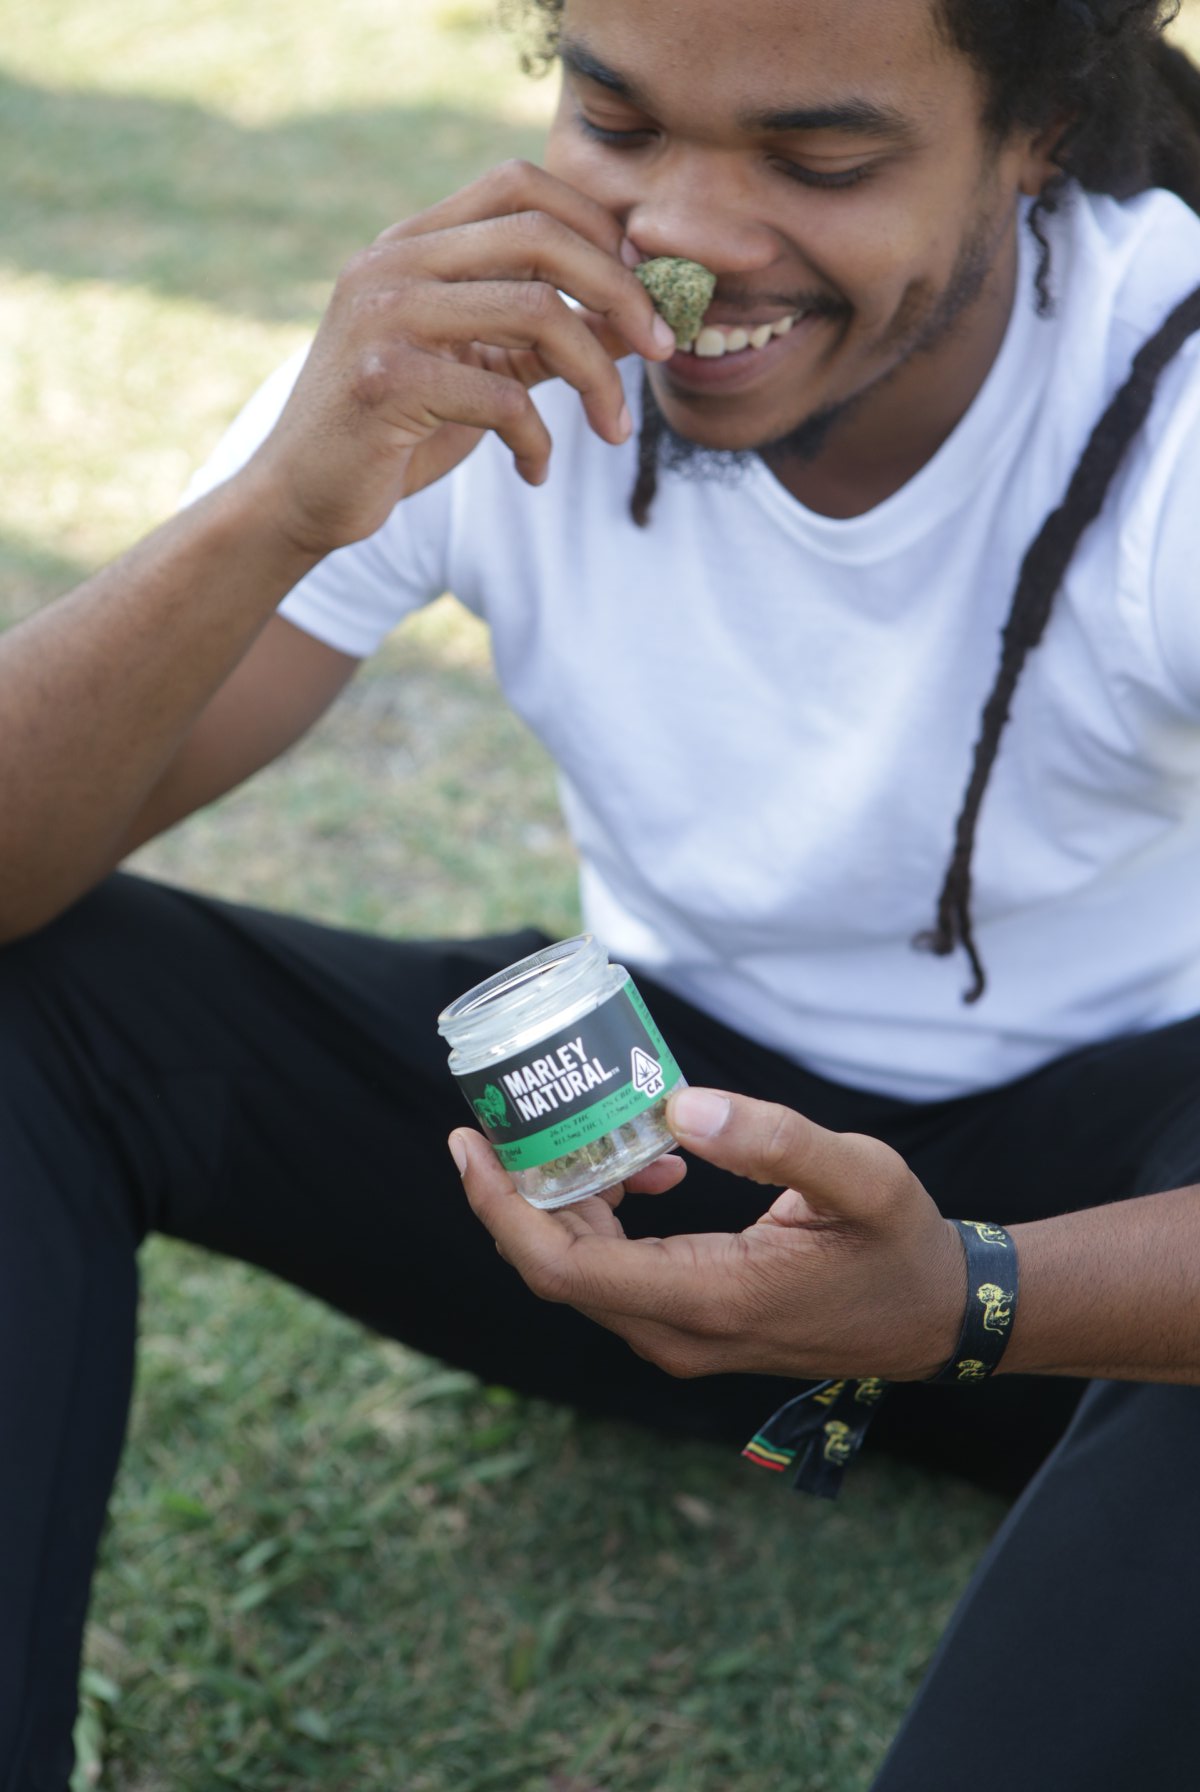 Marley Natural, la marca oficial de marihuana de Bob Marley